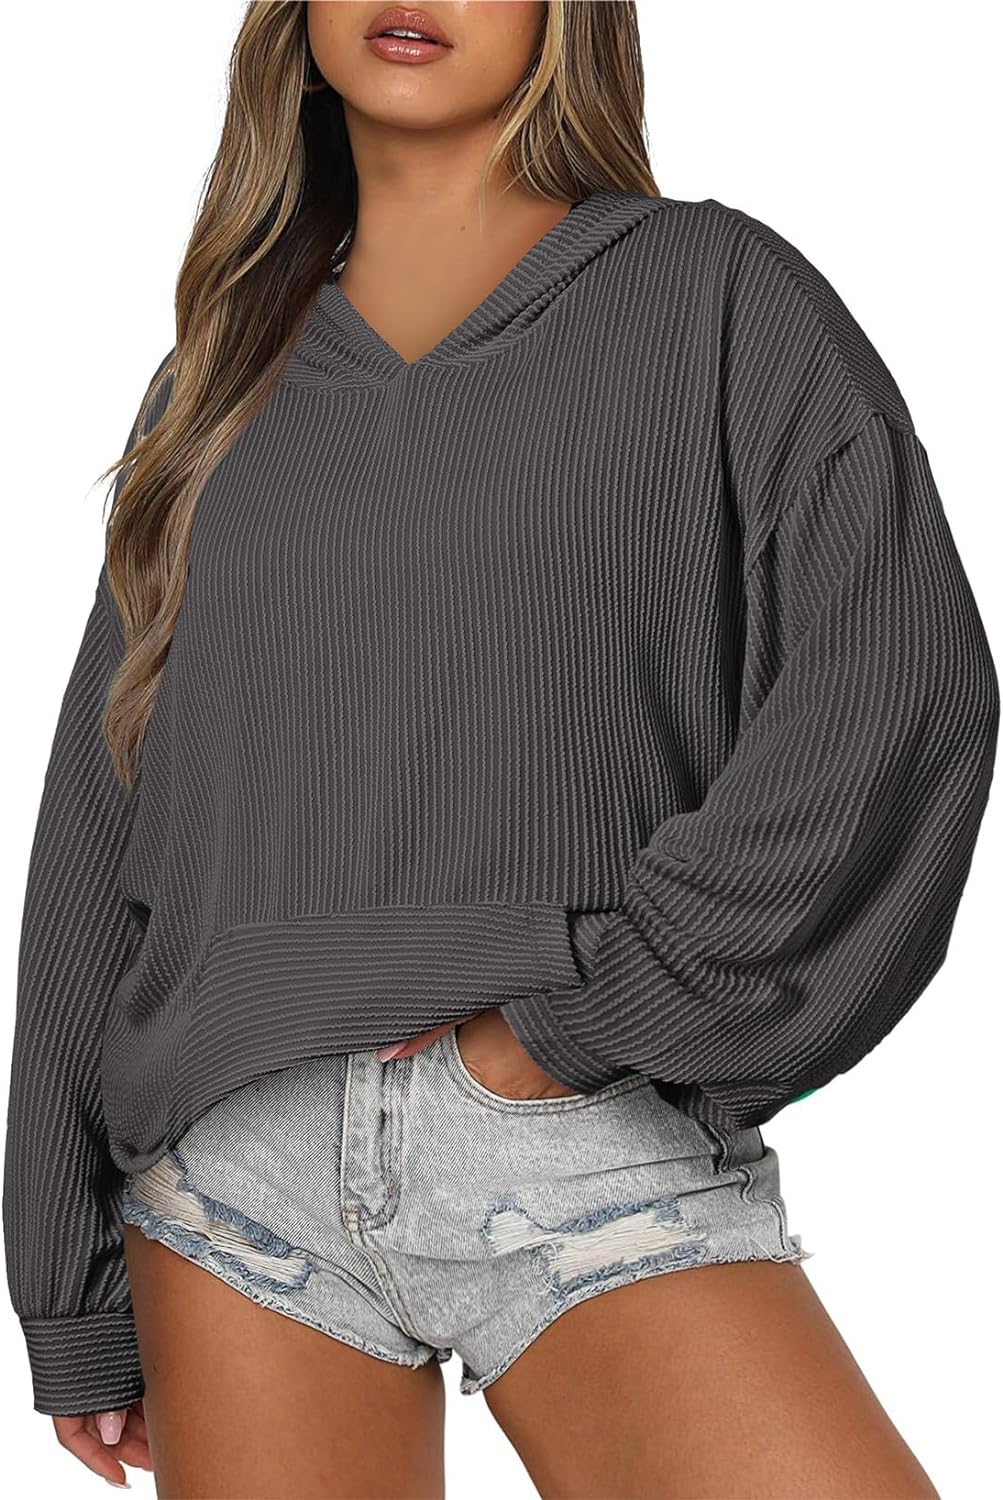 Eytino Womens Plus Size Crewneck Tunic Shirt Casual Long Sleeve